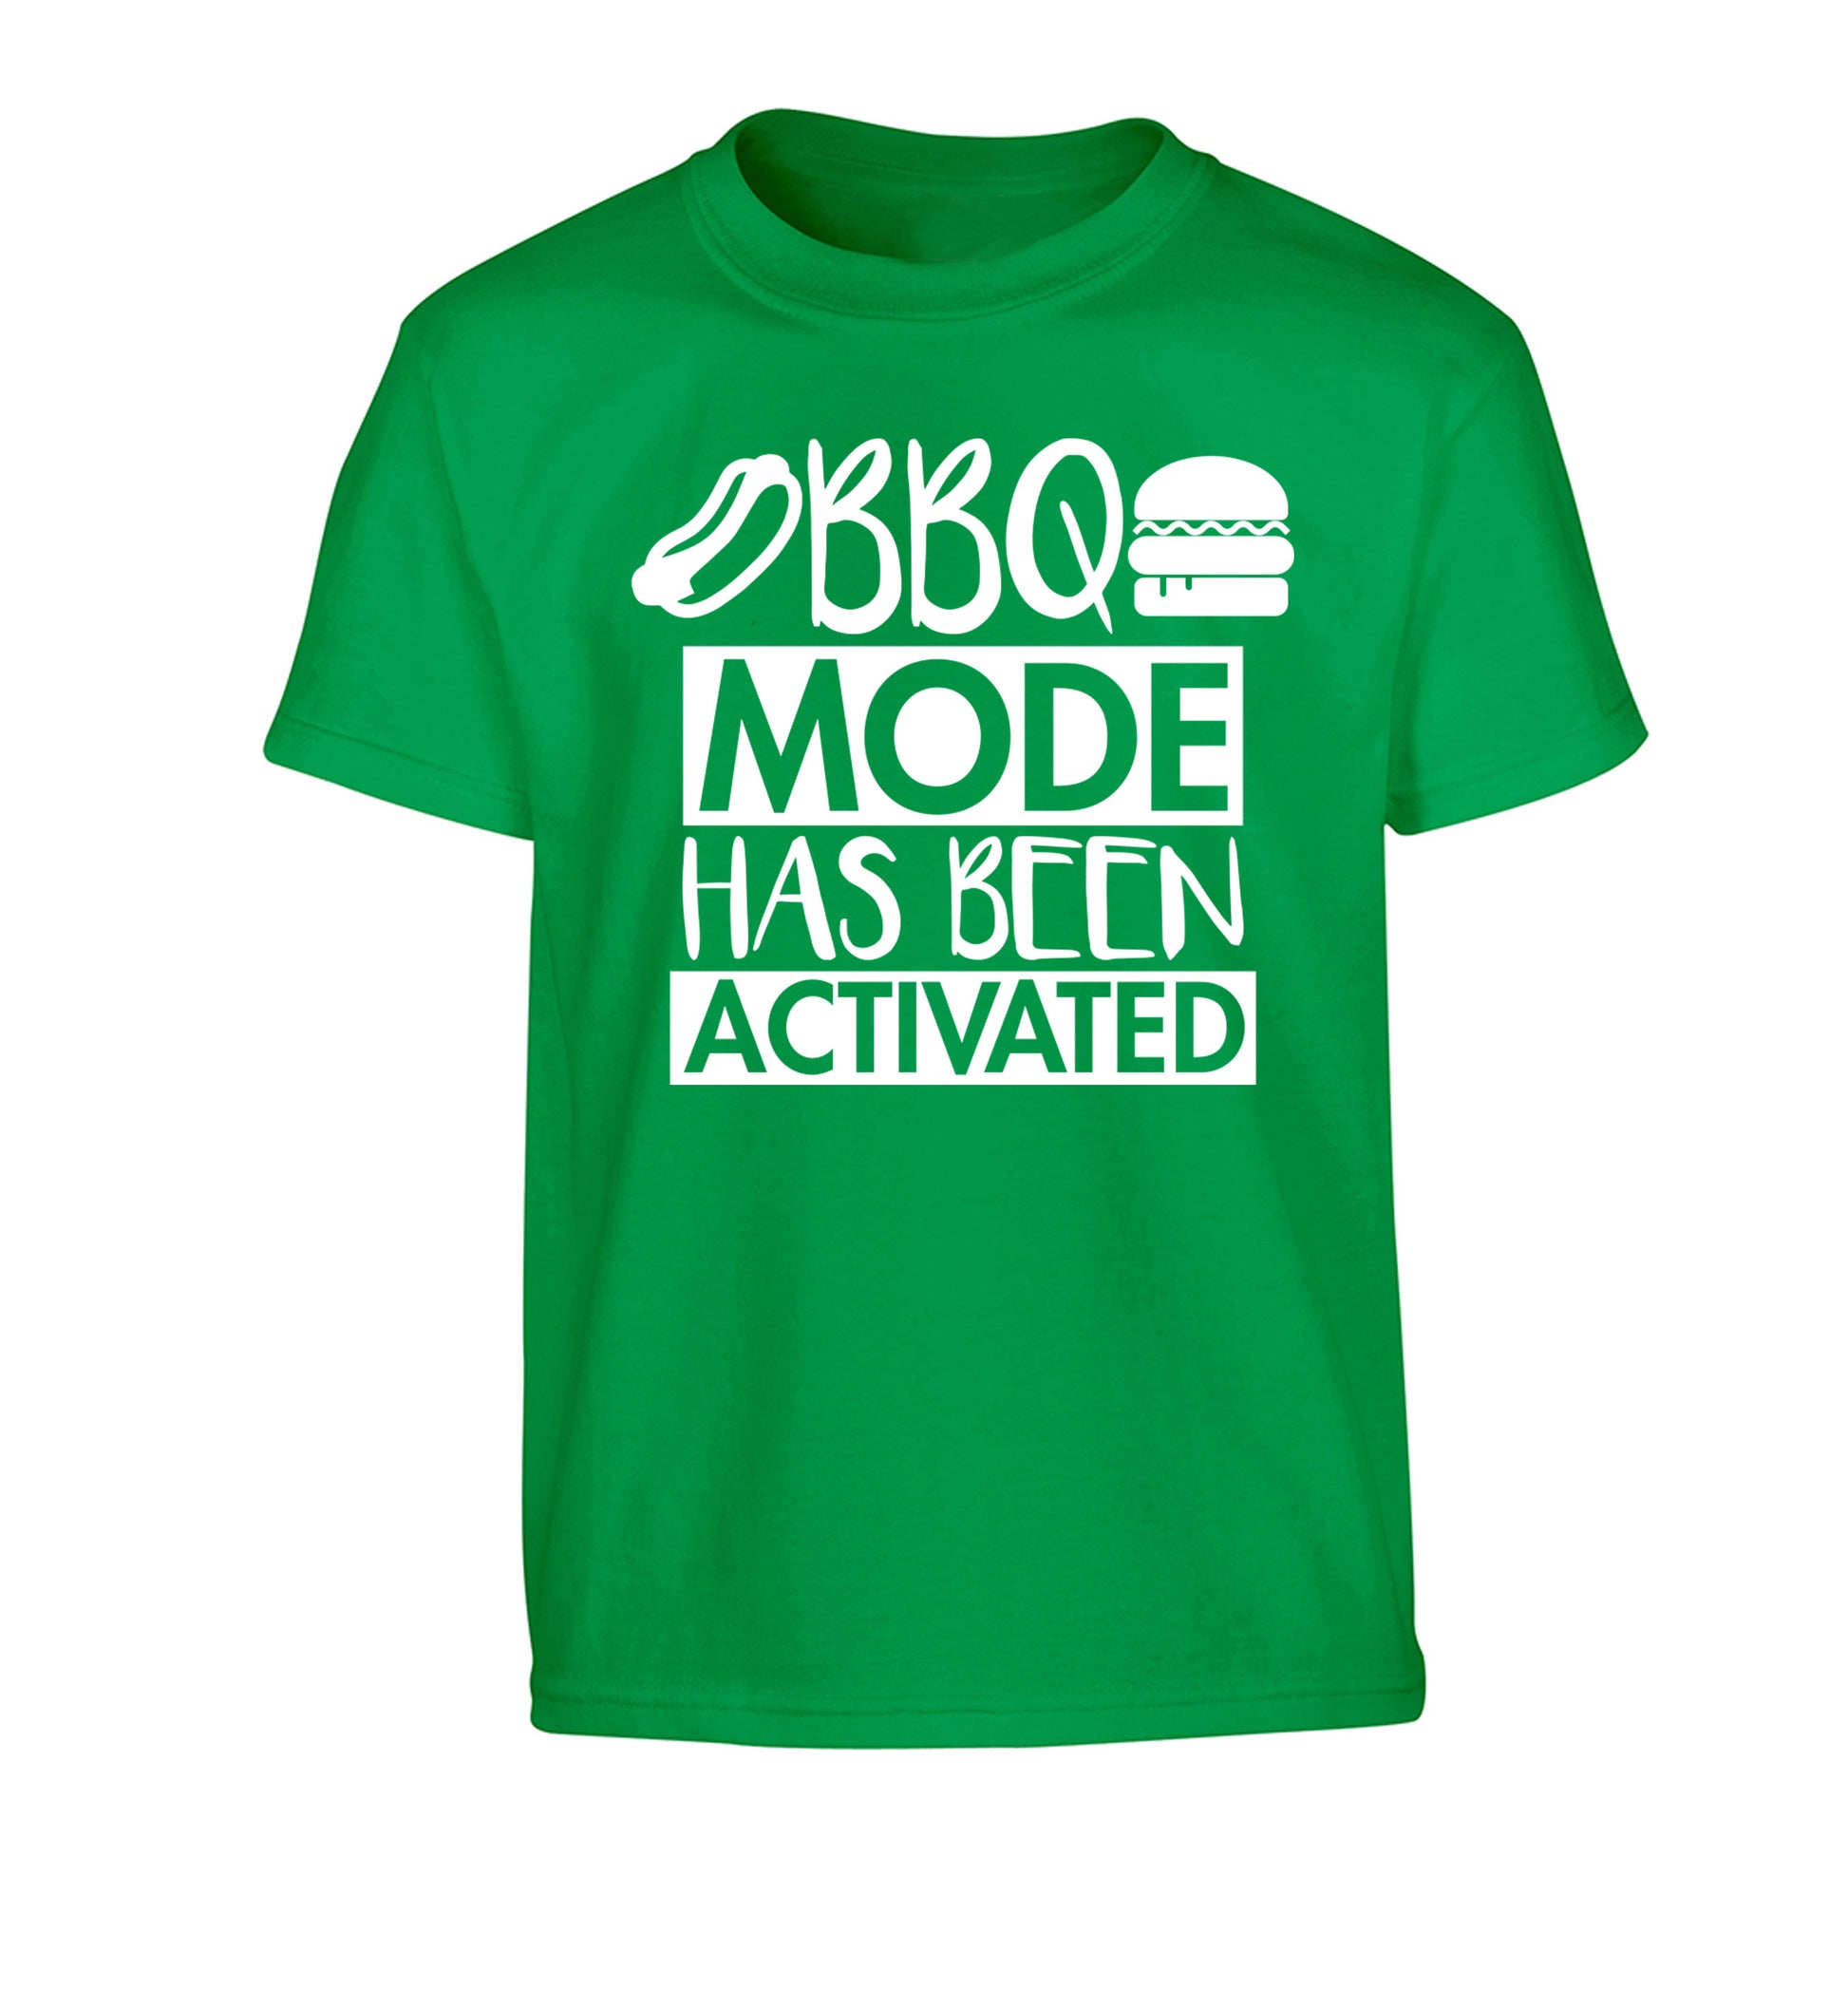 Bbq mode has been activated Children's green Tshirt 12-14 Years